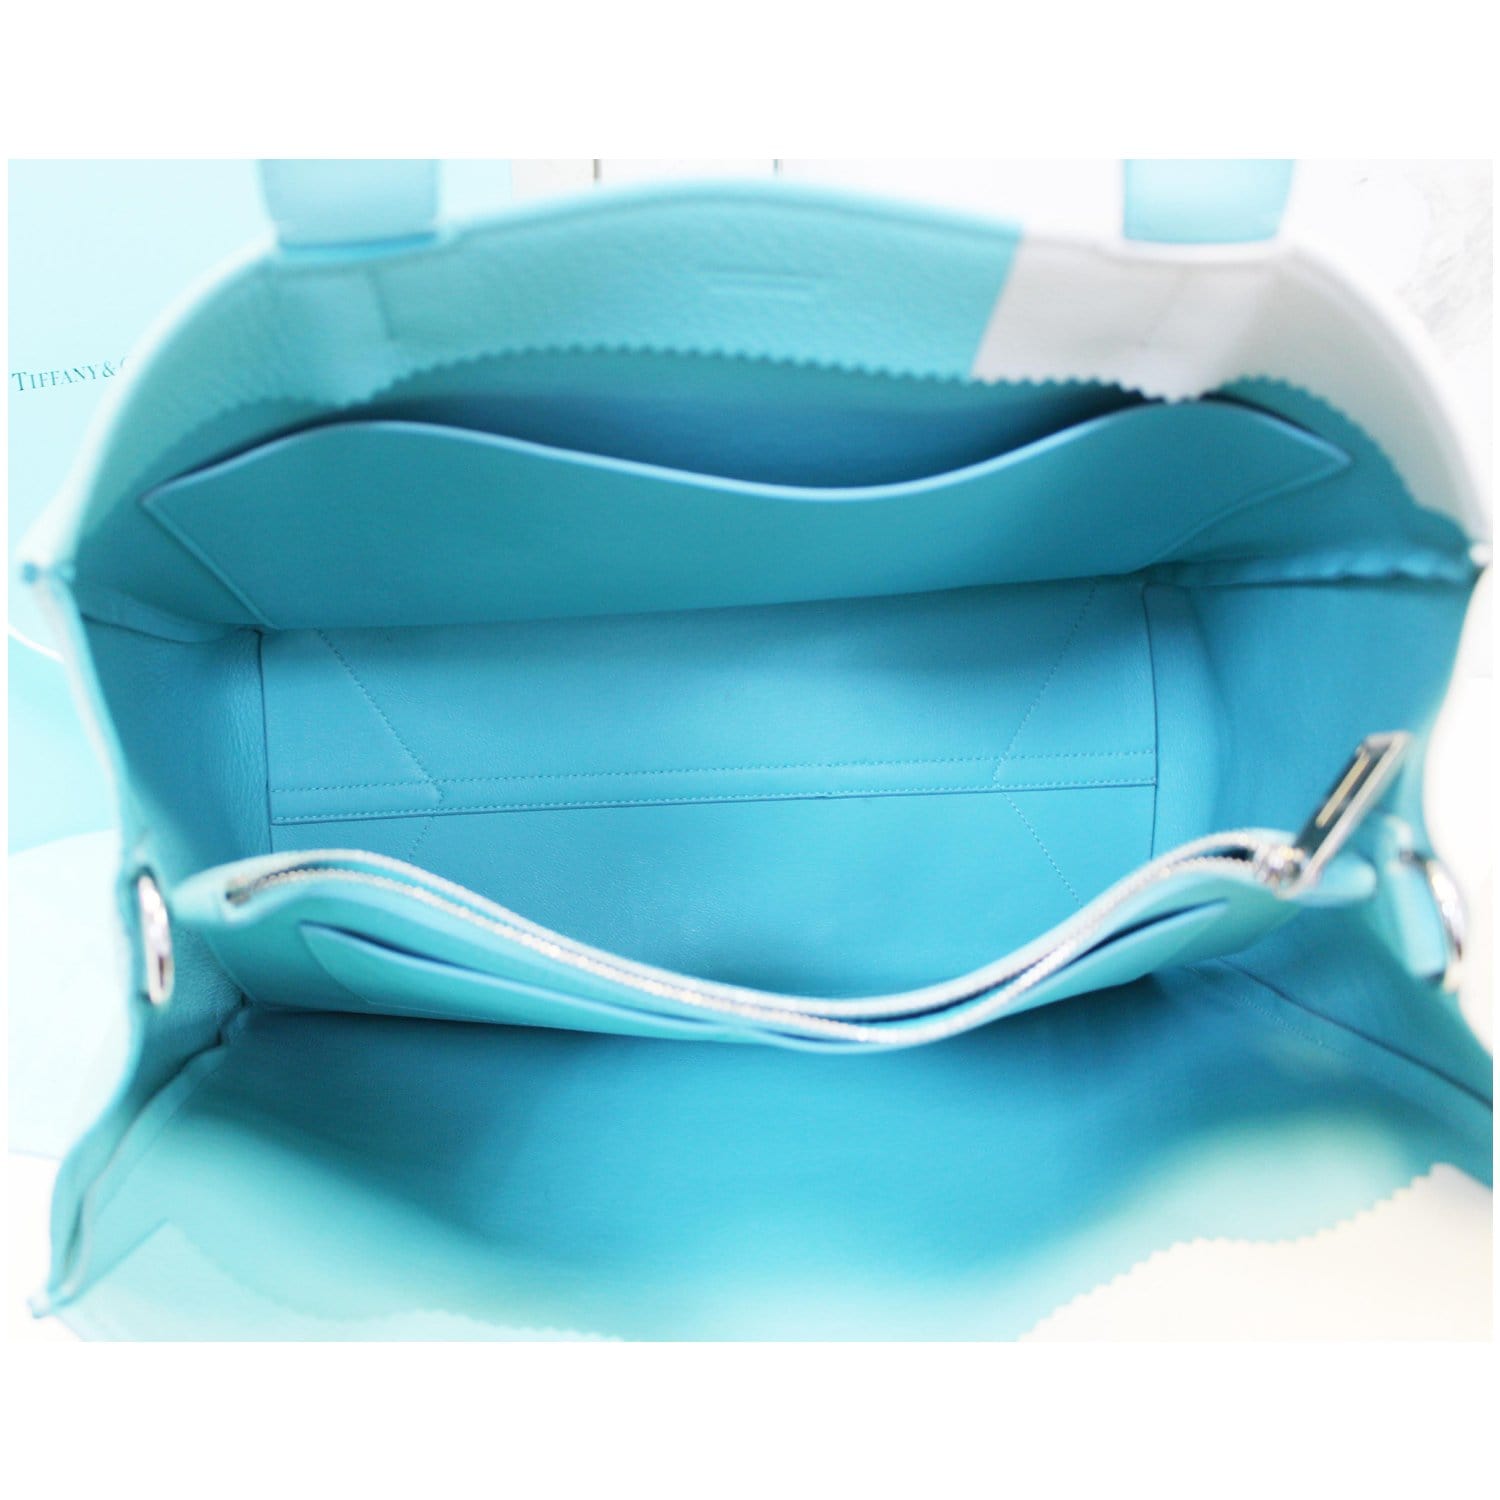 Kate Spade Vinyl Tote Shoulder Bag Tiffany Blue Purse with Heart pattern |  eBay